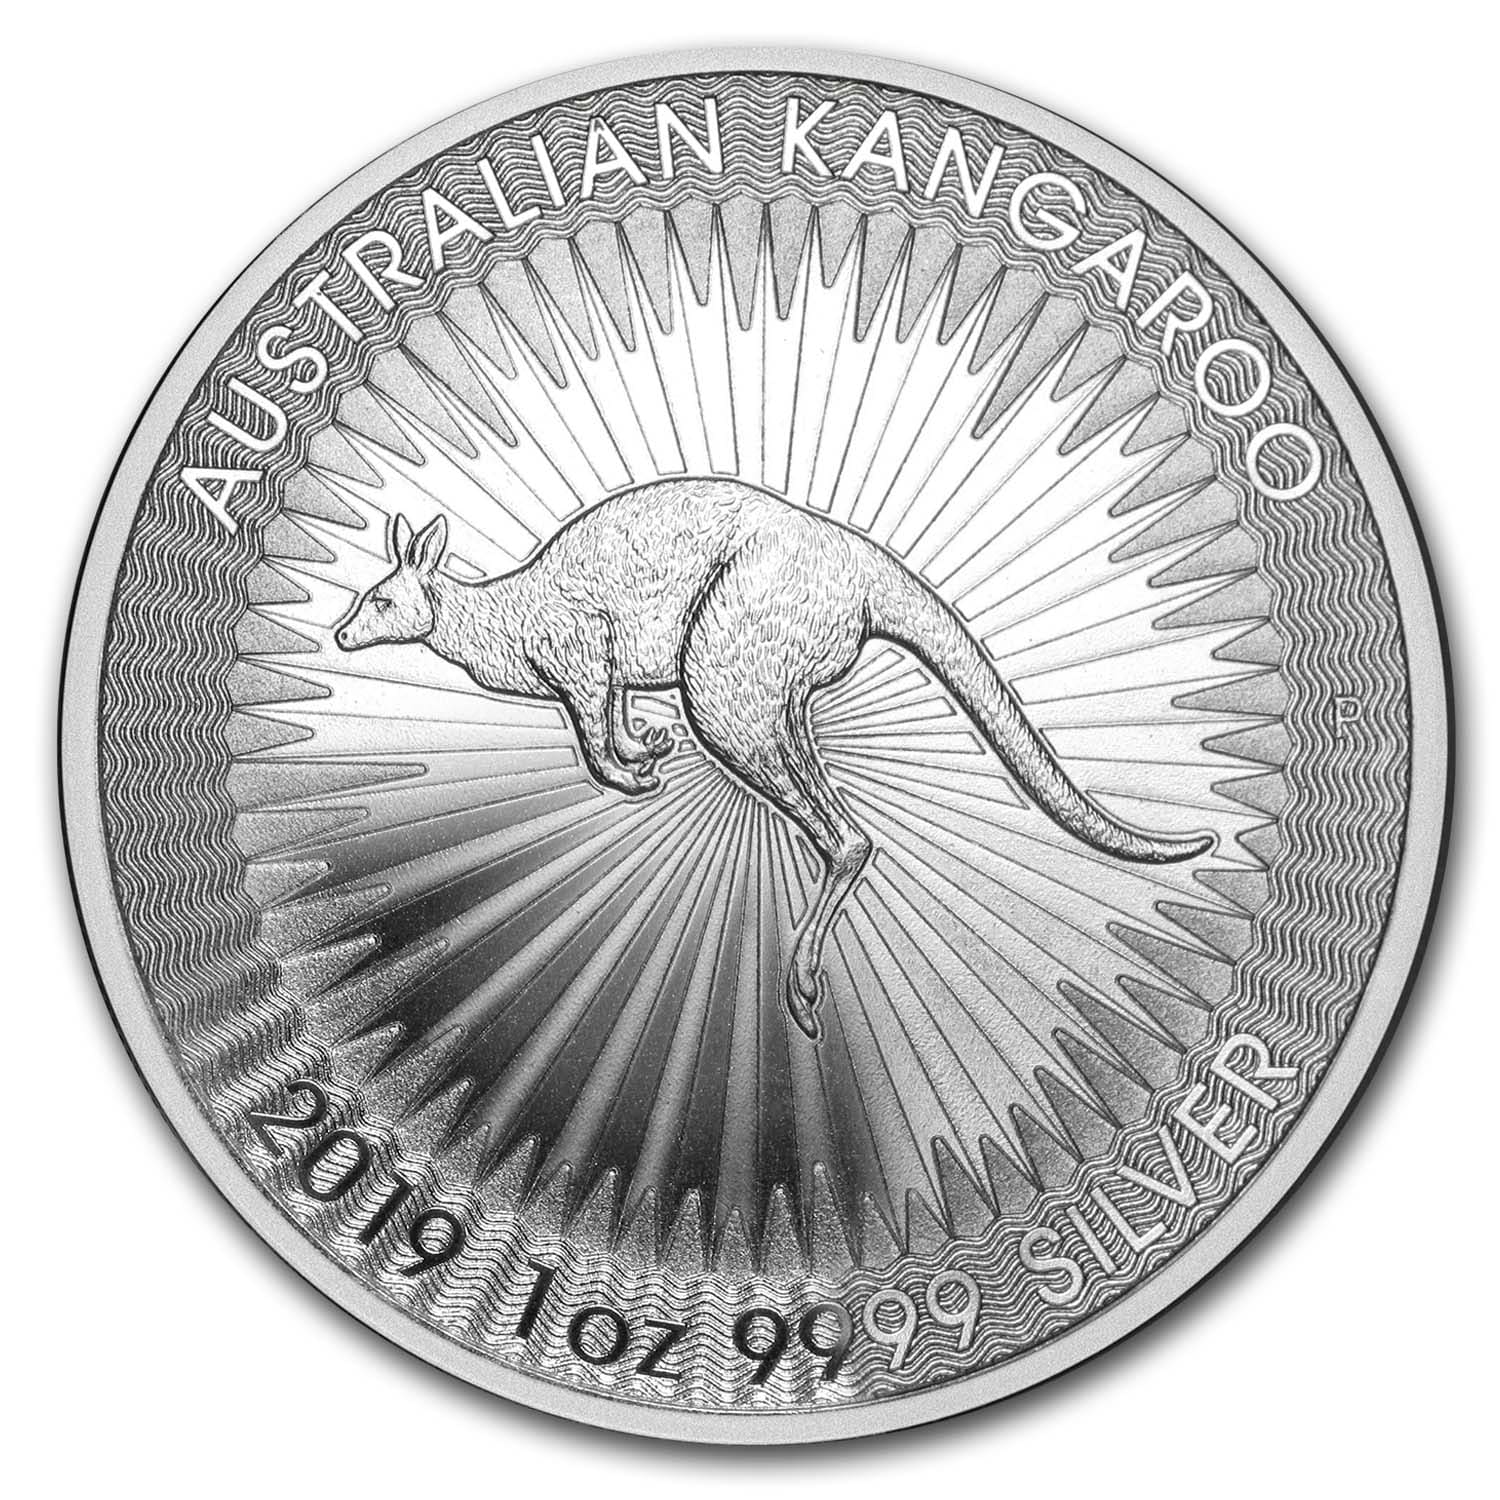 Lot of 10-2017 1oz Silver Kangaroo .9999 Fine BU 